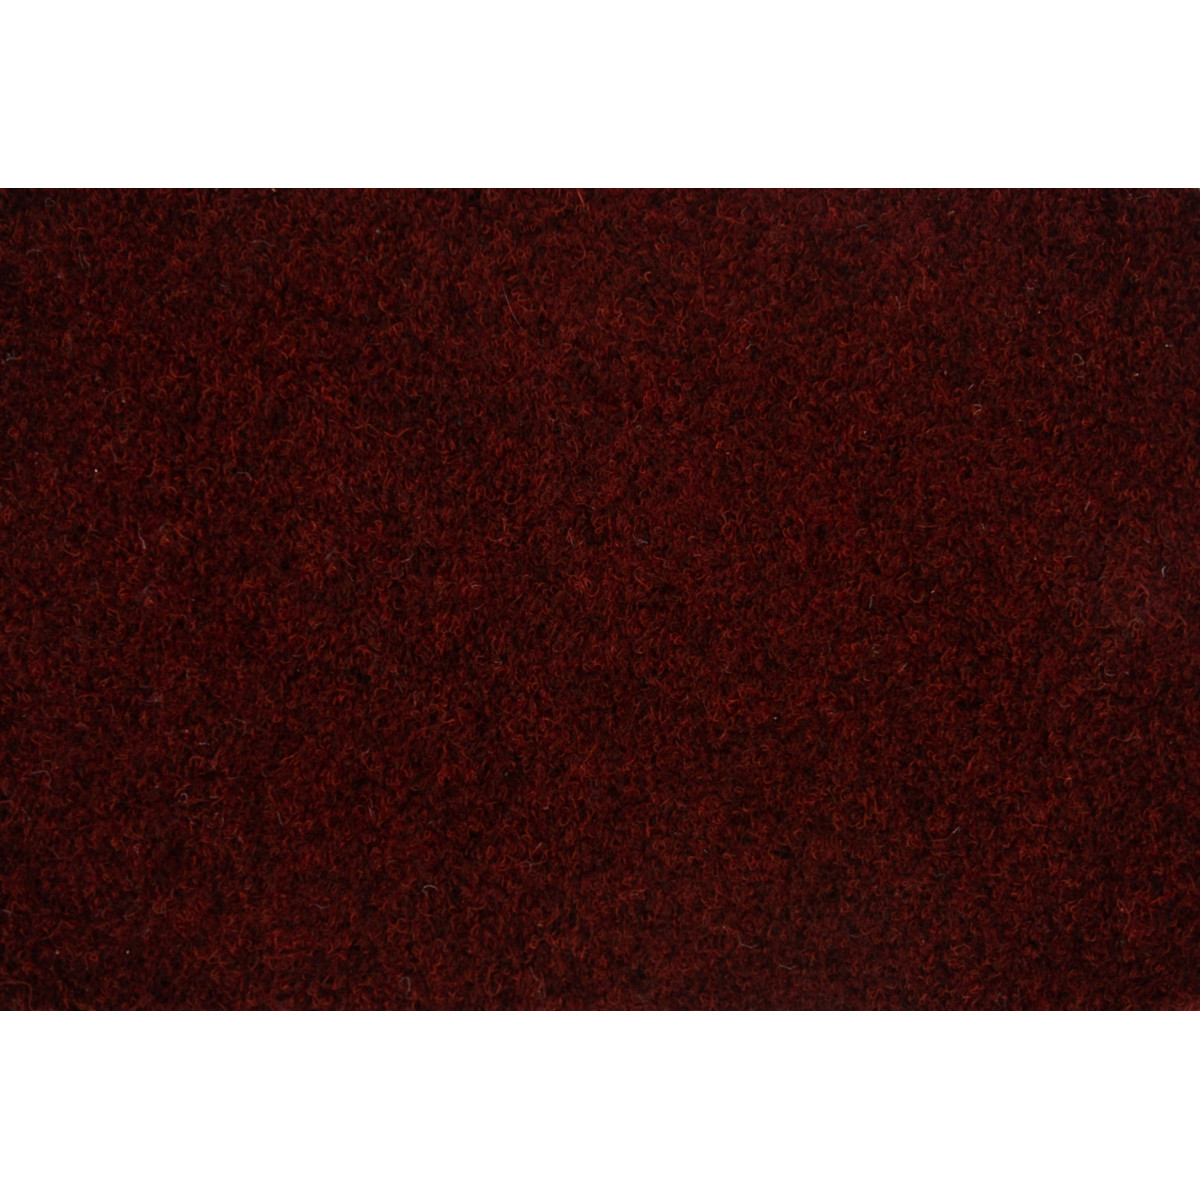 Metrážový koberec Sydney 0706 červený, zátěžový